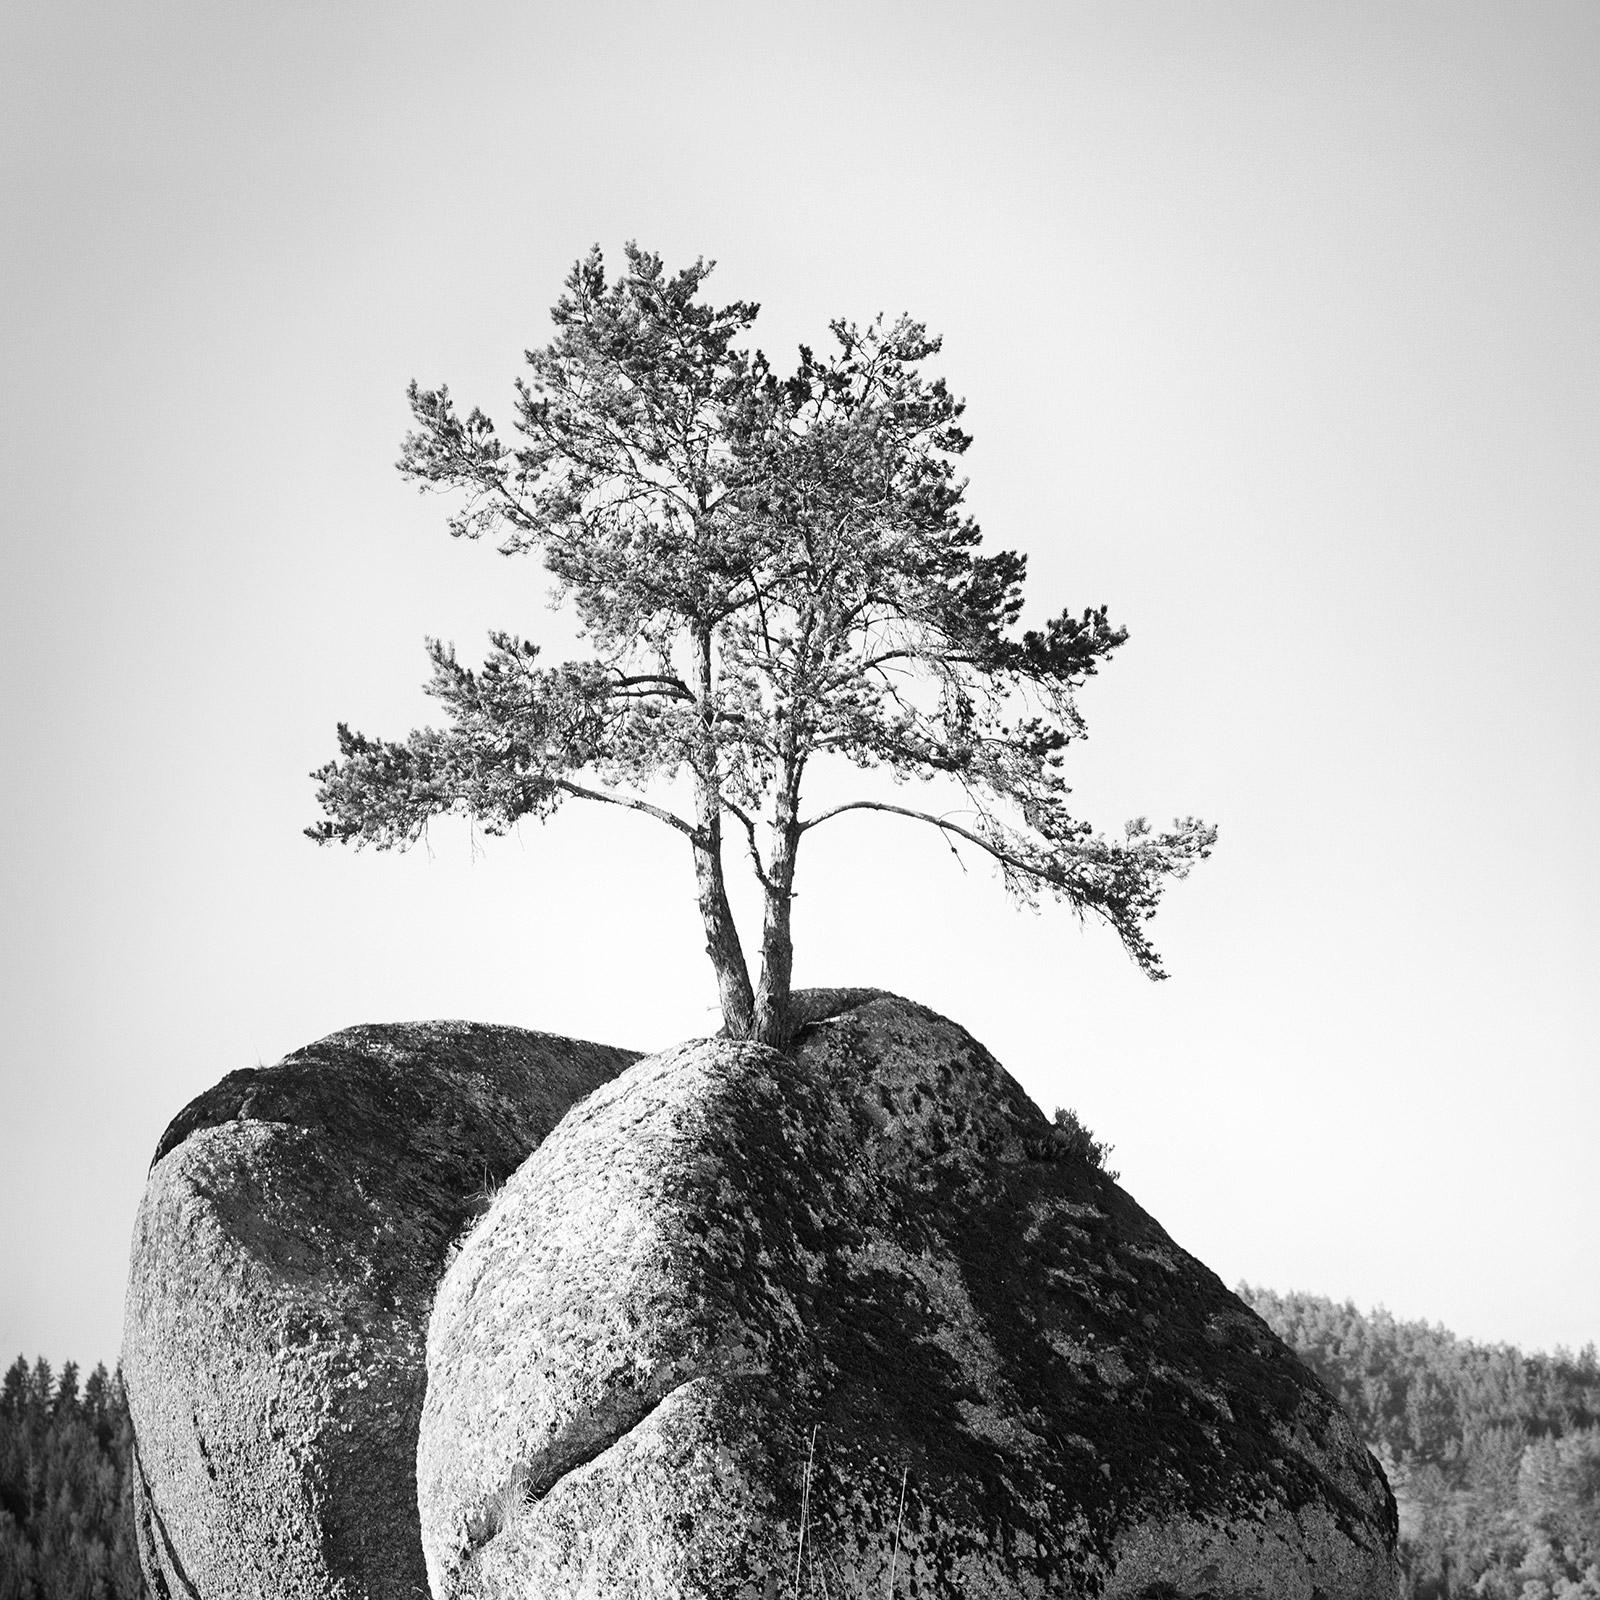 Tree on the Rock, Austria, minimalist black and white landscape art photography